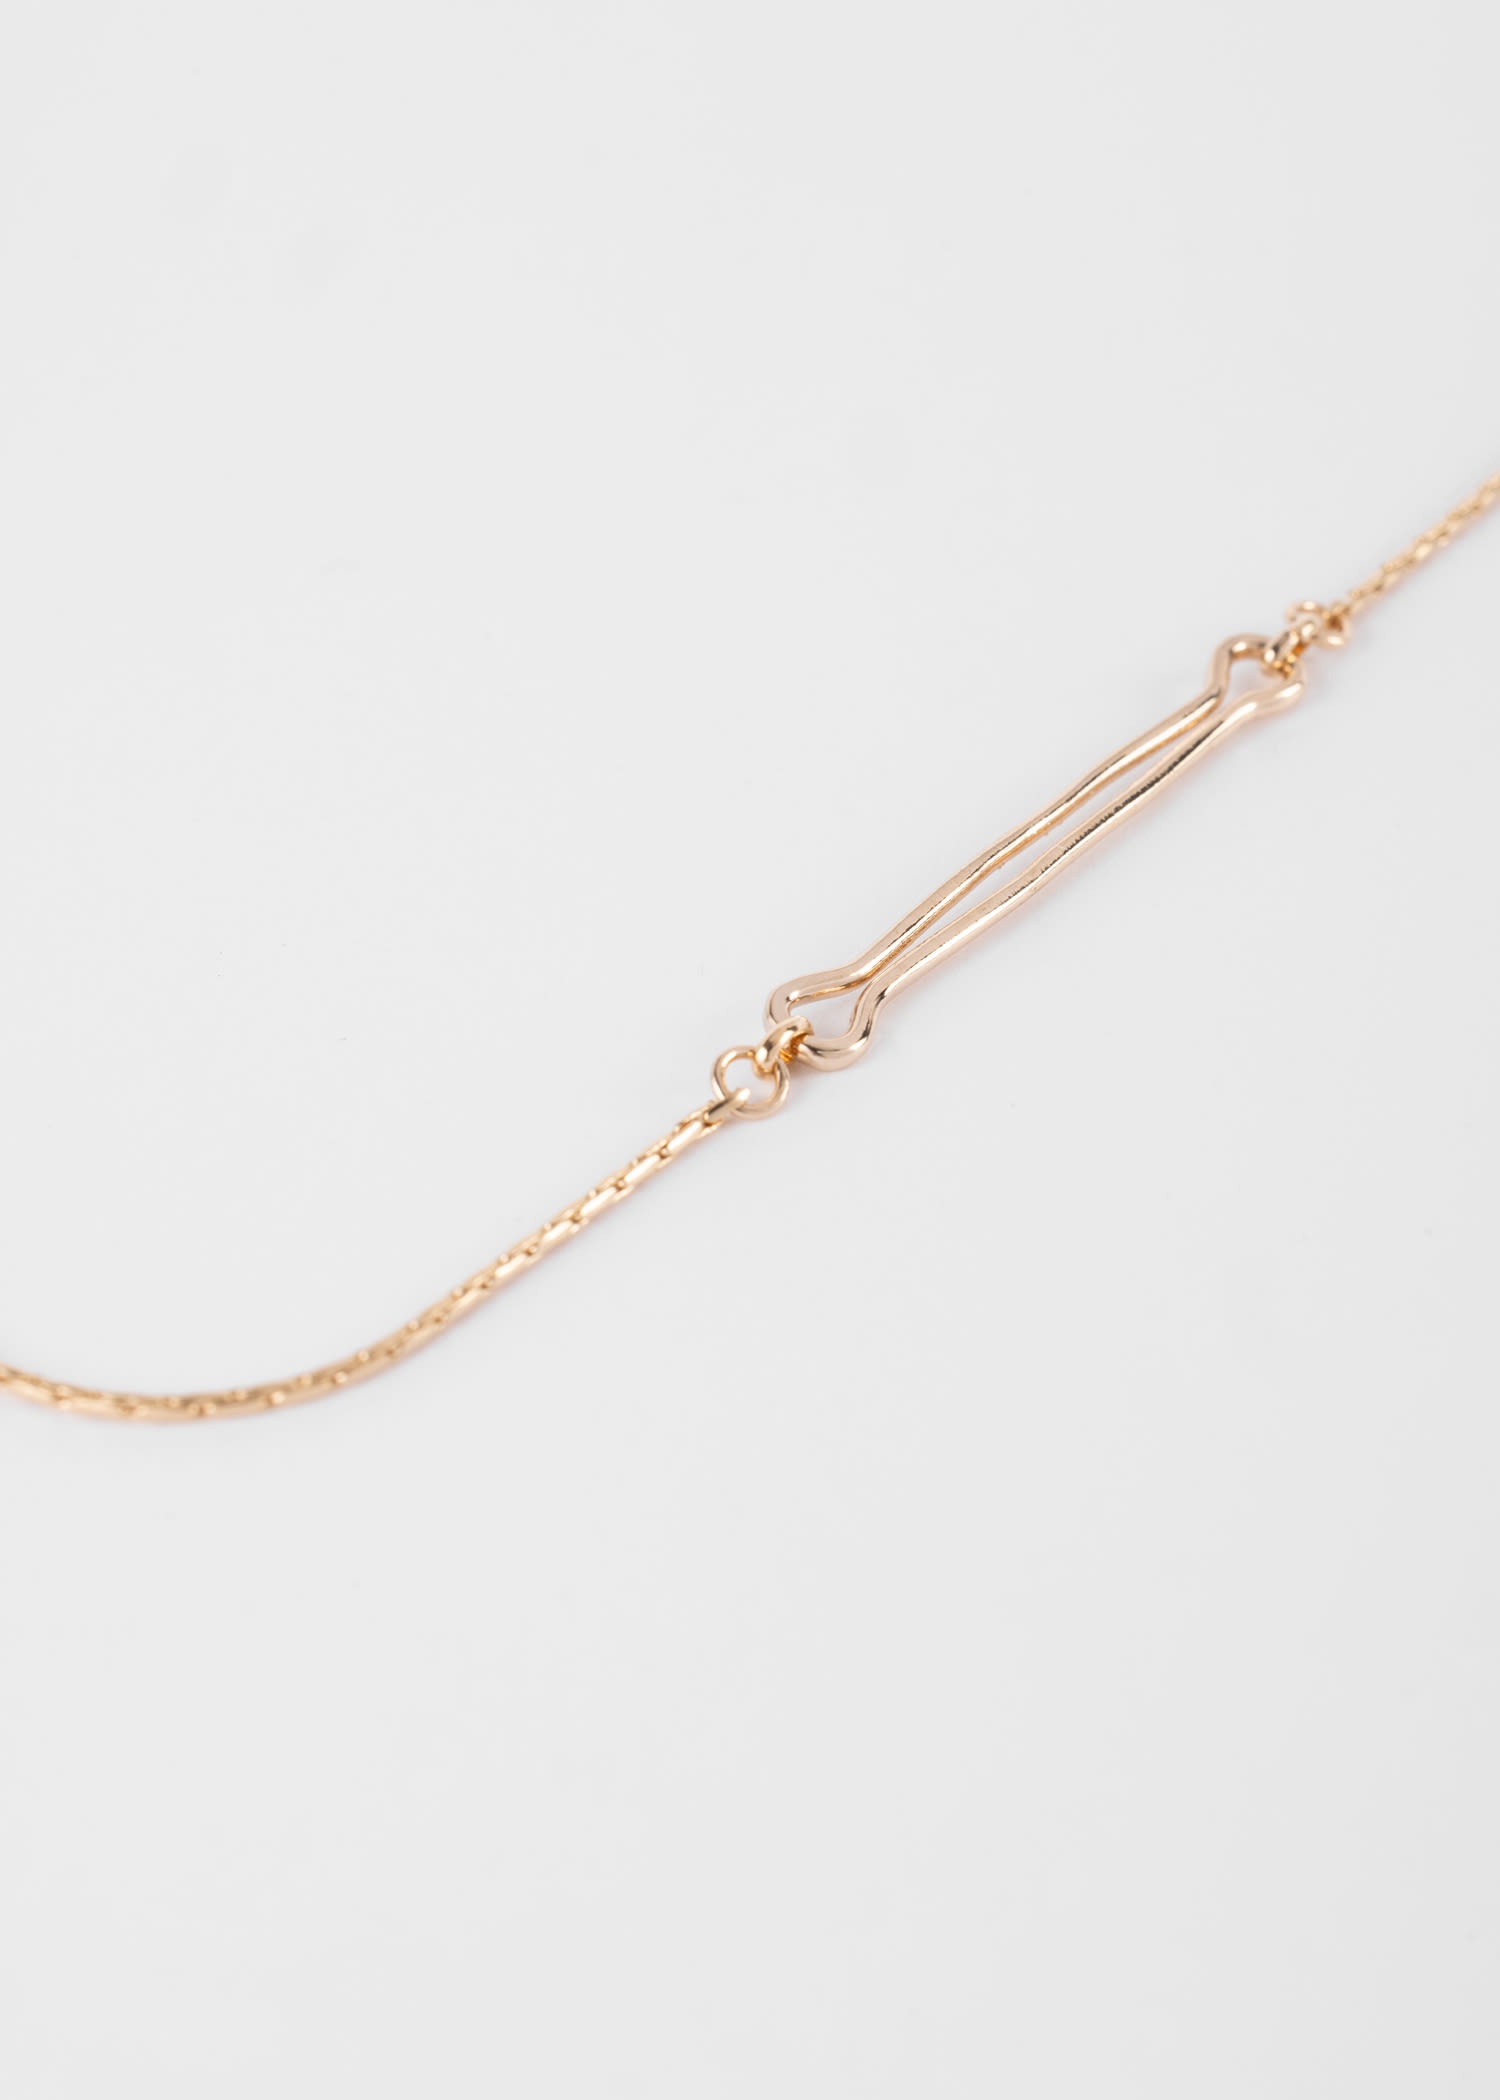 'Iliana' Long Link Necklace by Helena Rohner - 3